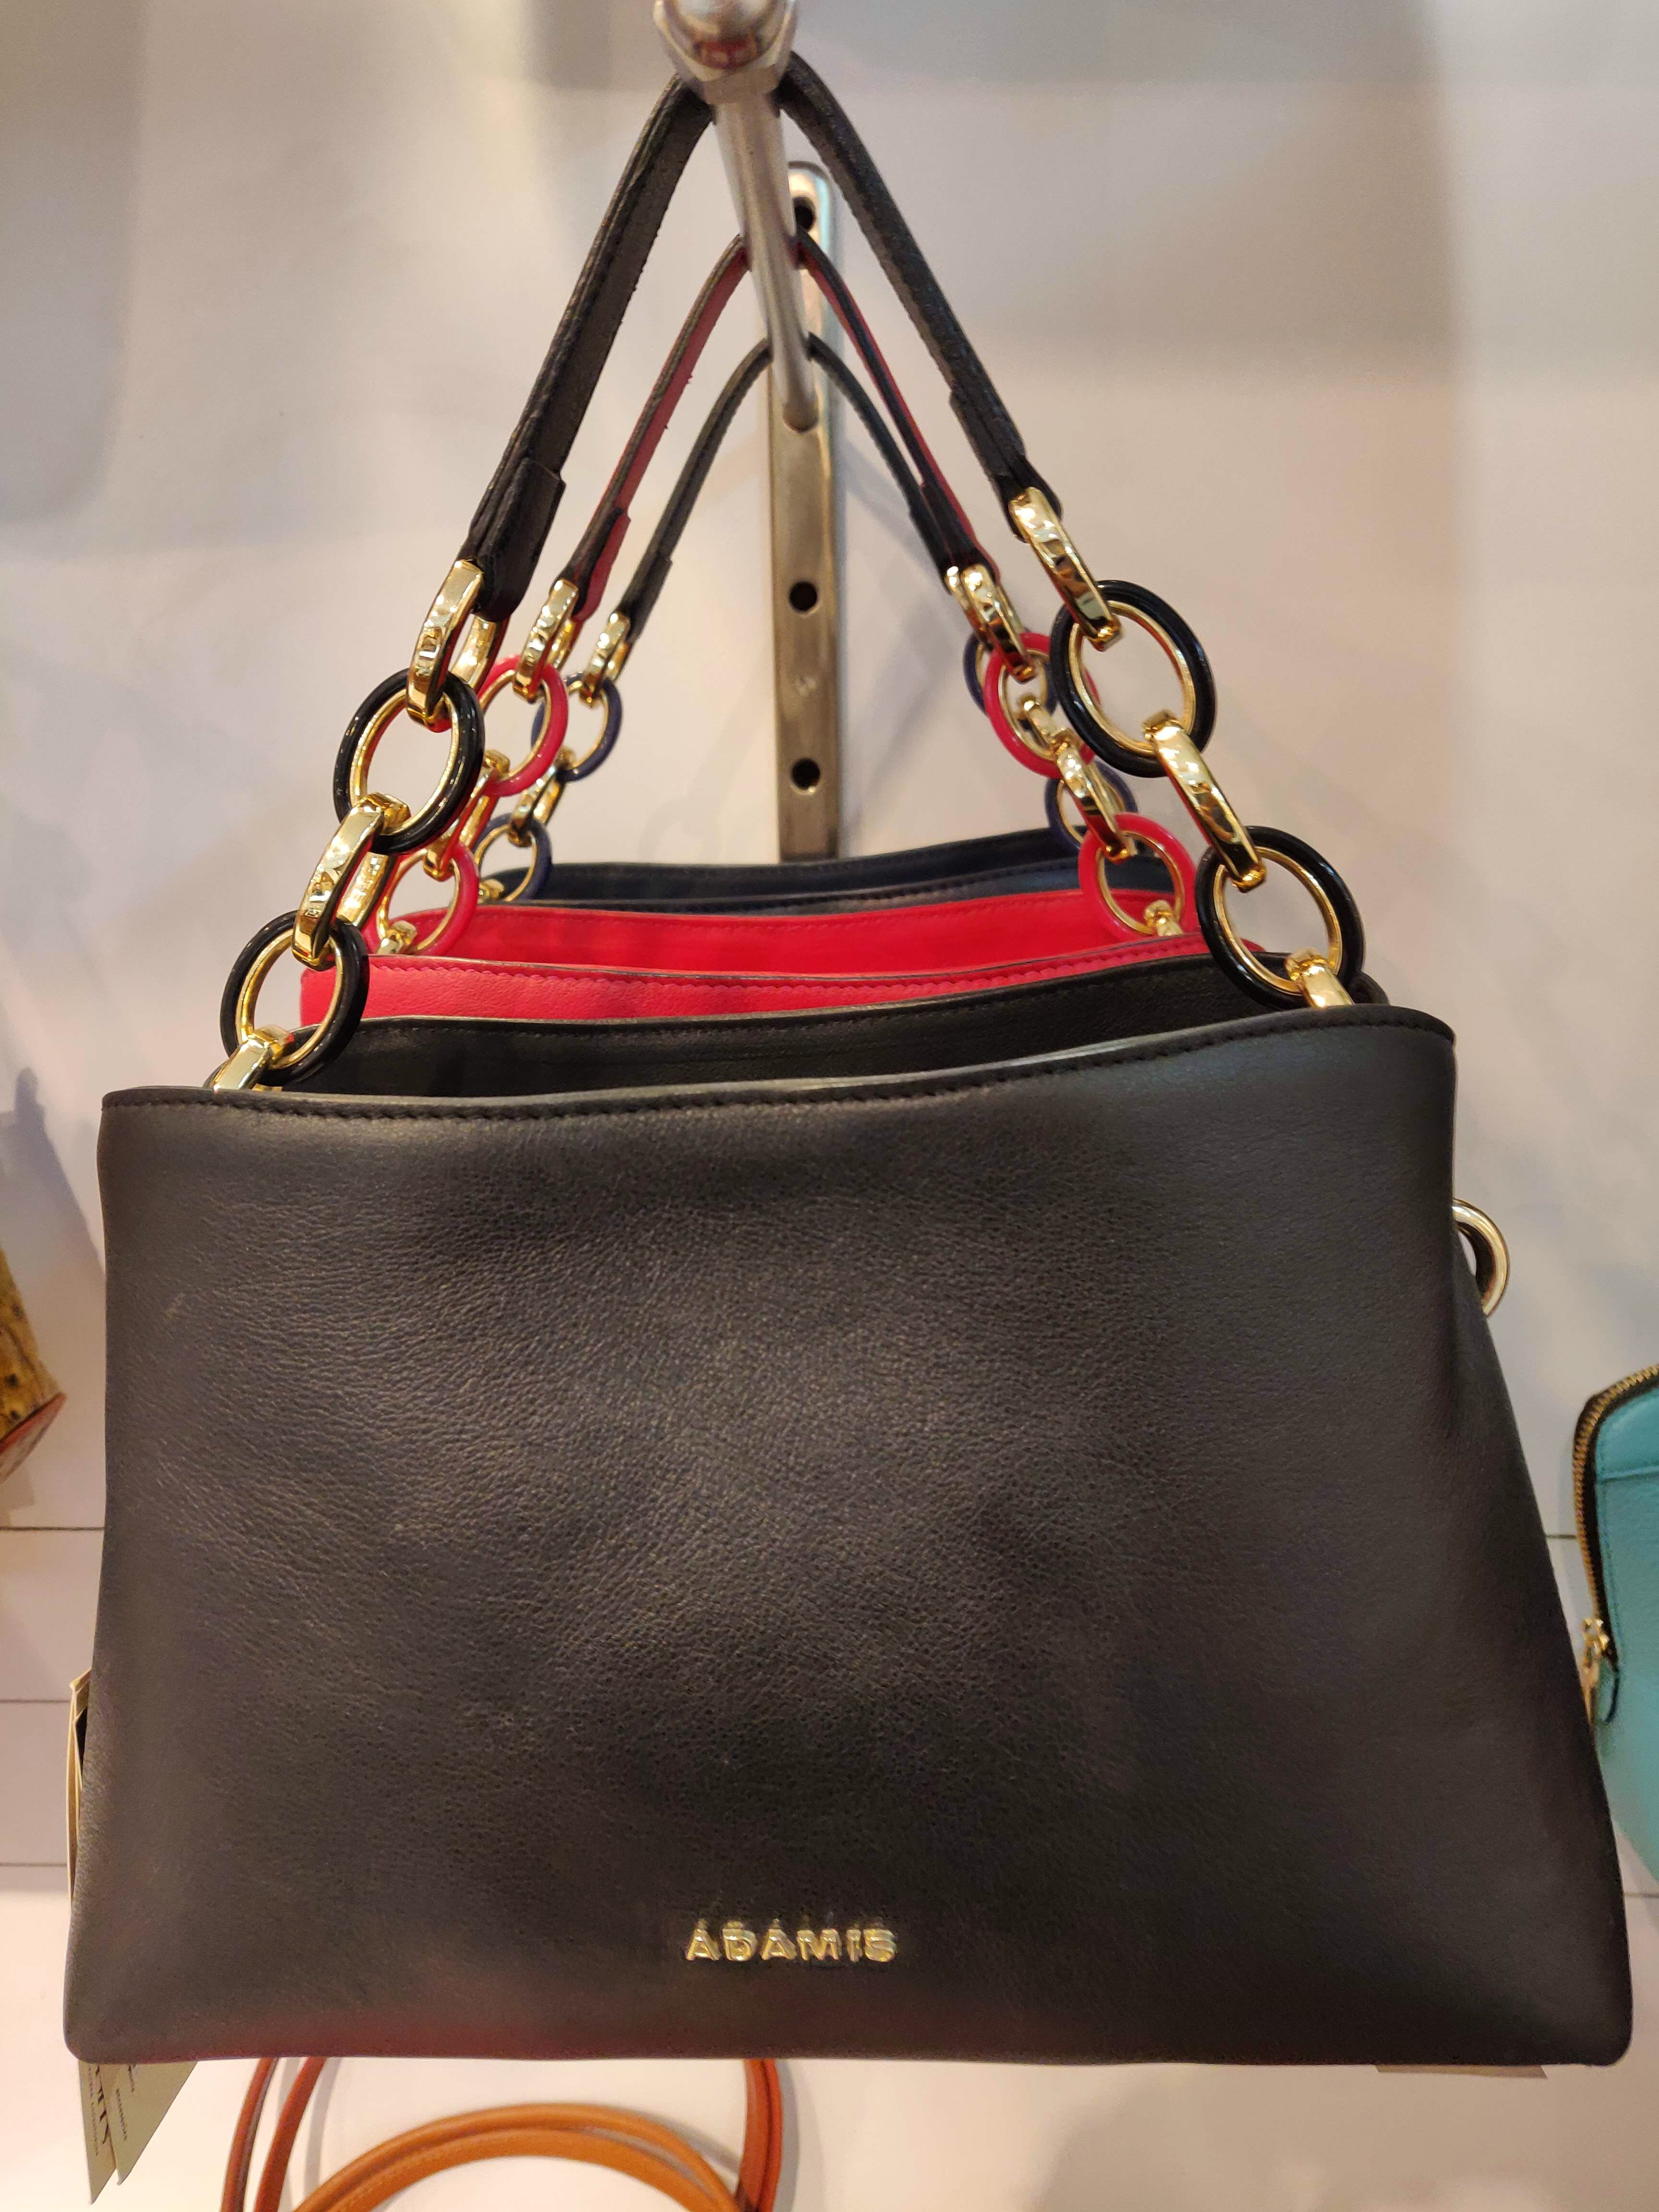 Buy Adamis Tan Leather Women Handbag B783 at Amazon.in